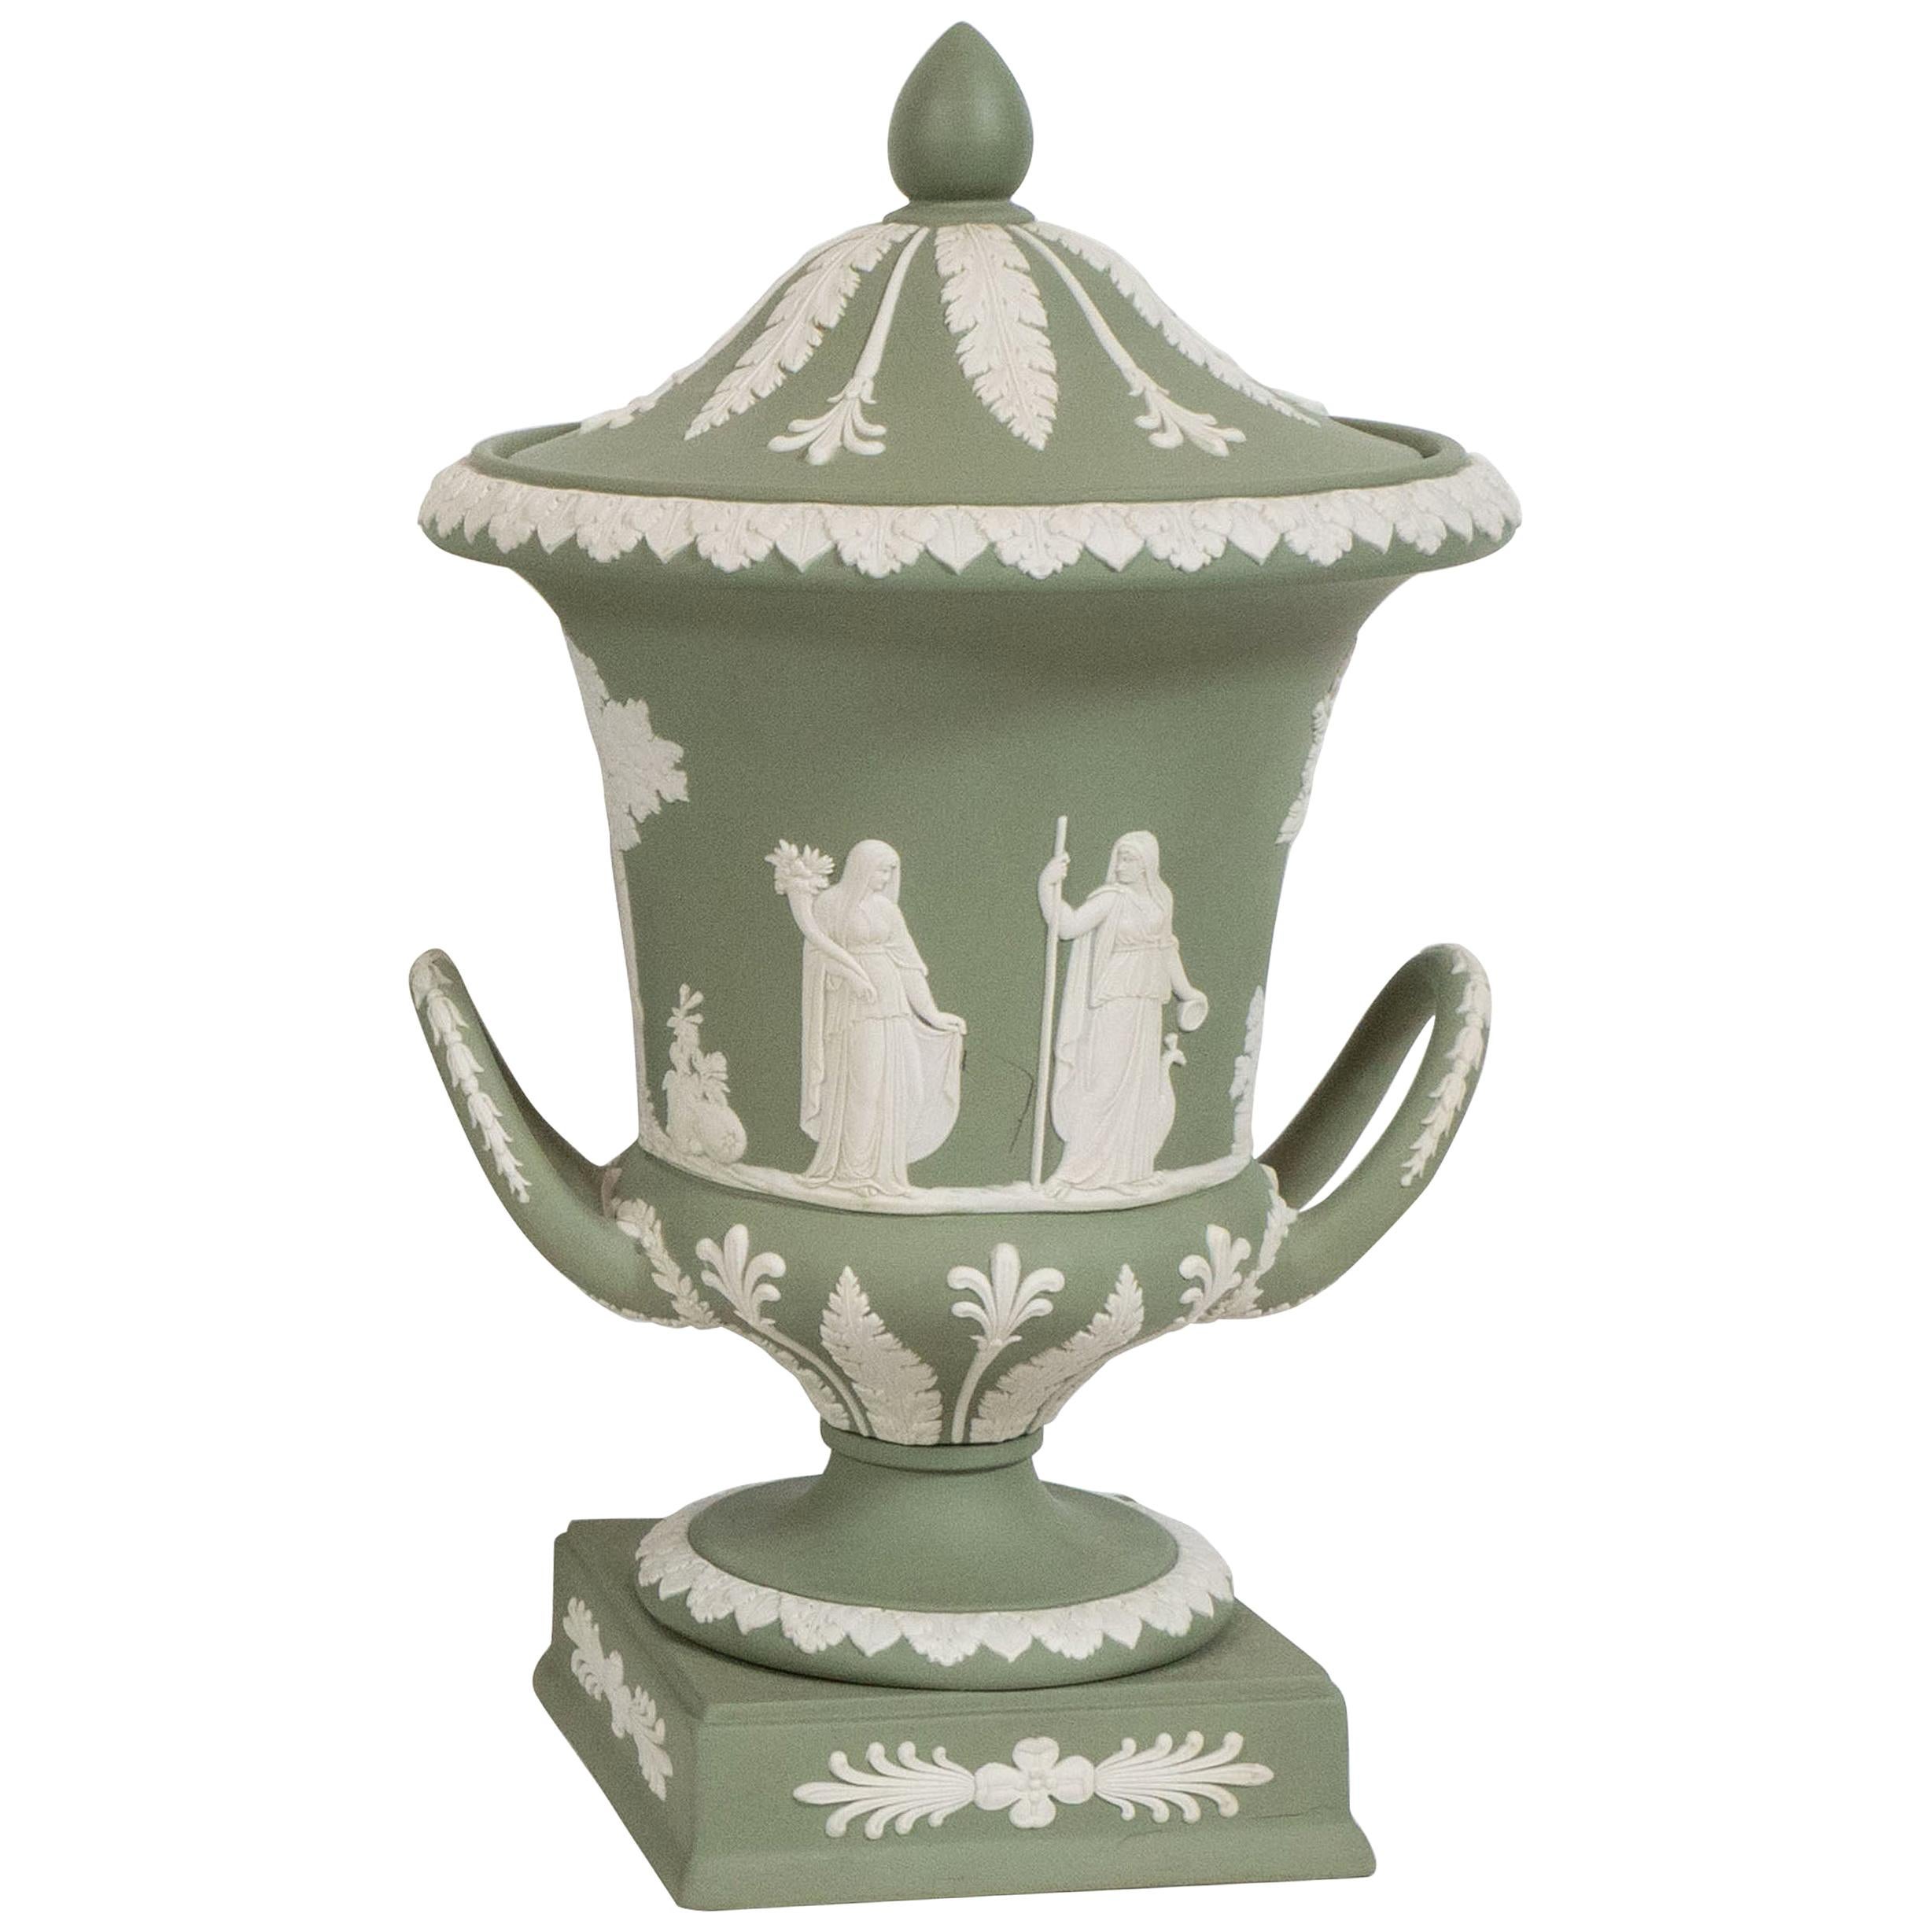 Neoclassical Jasperware Ceramic Covered Urn in Olive and White by Wedgwood